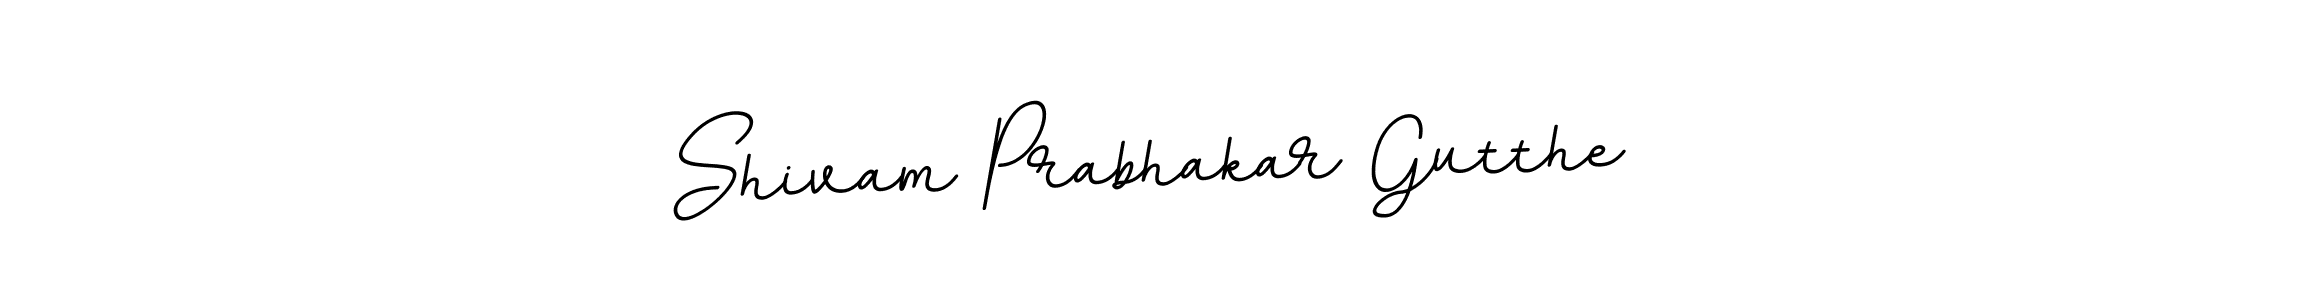 Shivam Prabhakar Gutthe stylish signature style. Best Handwritten Sign (BallpointsItalic-DORy9) for my name. Handwritten Signature Collection Ideas for my name Shivam Prabhakar Gutthe. Shivam Prabhakar Gutthe signature style 11 images and pictures png